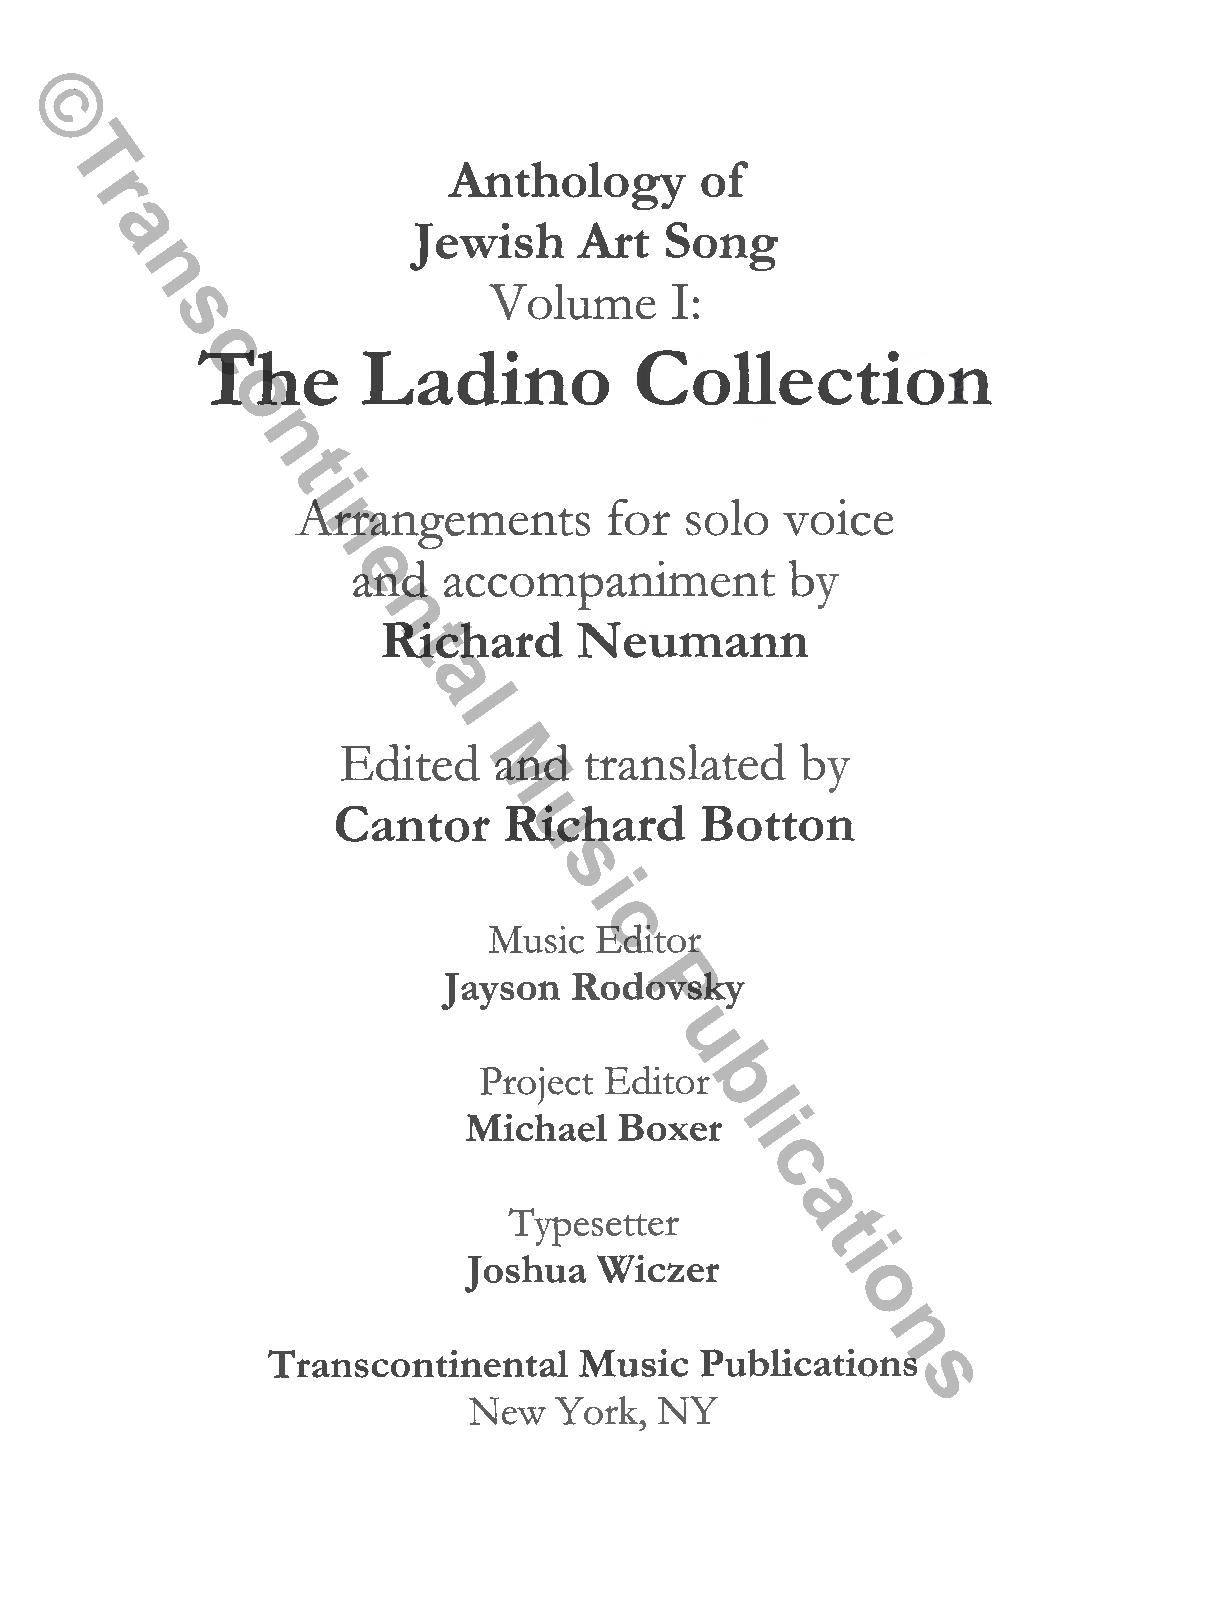 The Ladino Fakebook Sheet Music Songs in Judeo-Spanish Melody Lyrics C 000333880 